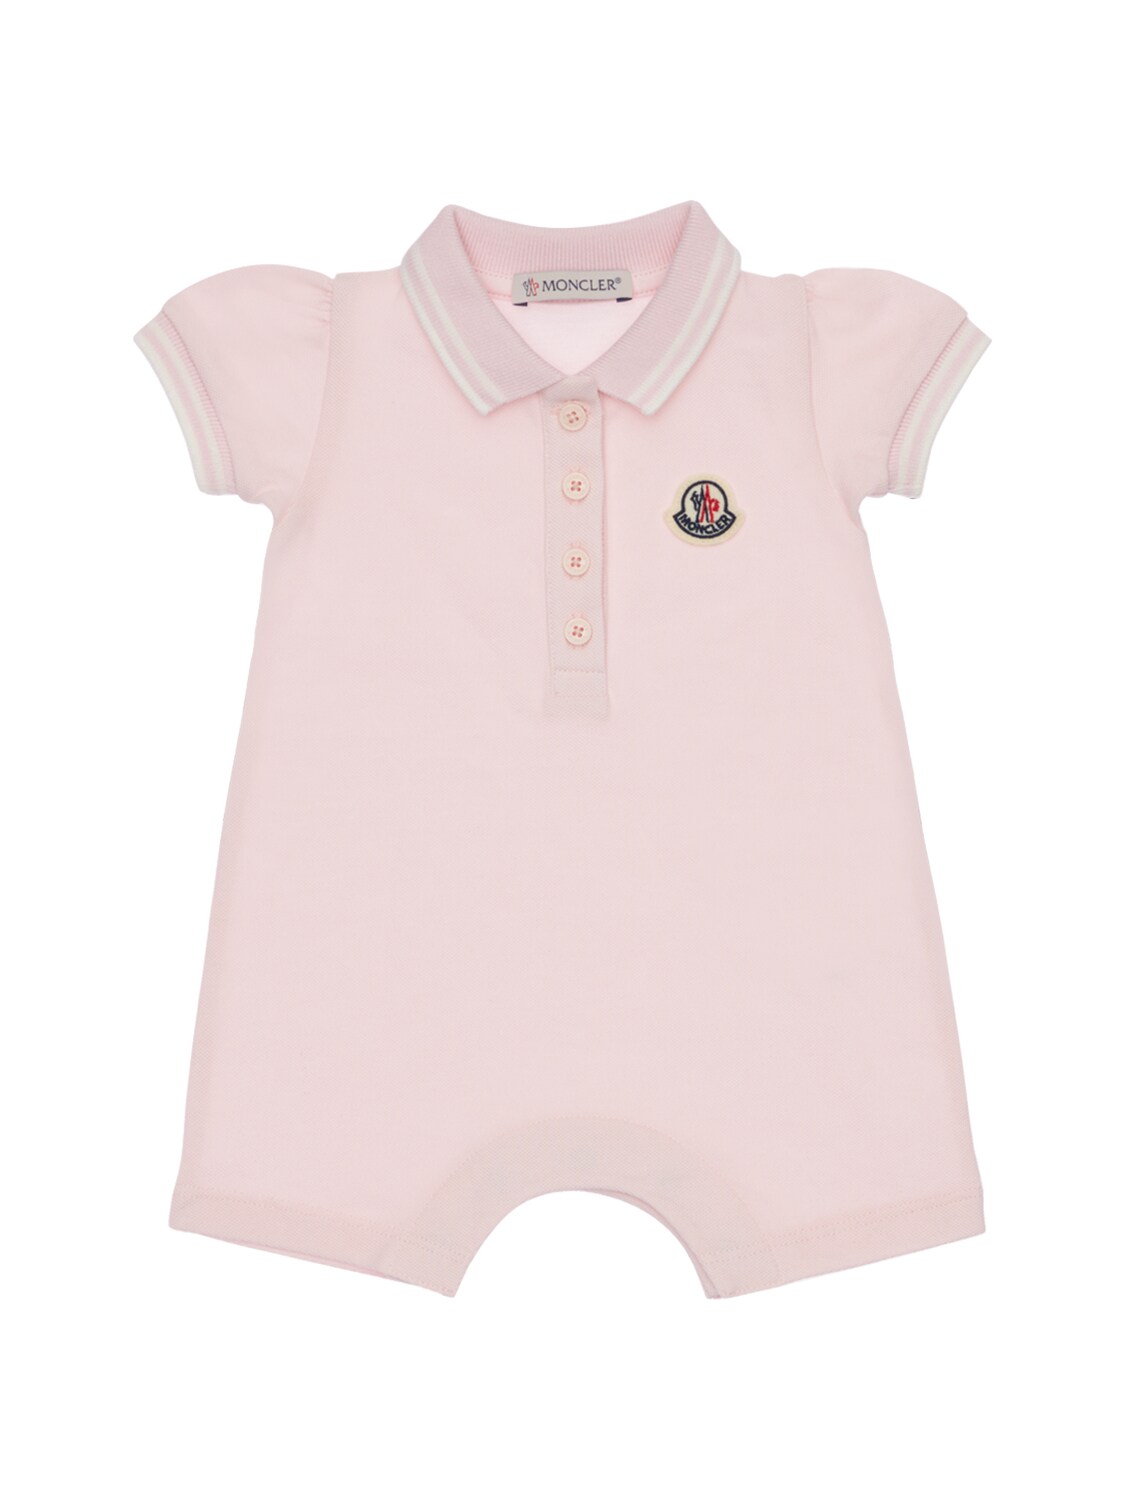 Moncler Babies' Cotton Piquet Romper In Pink